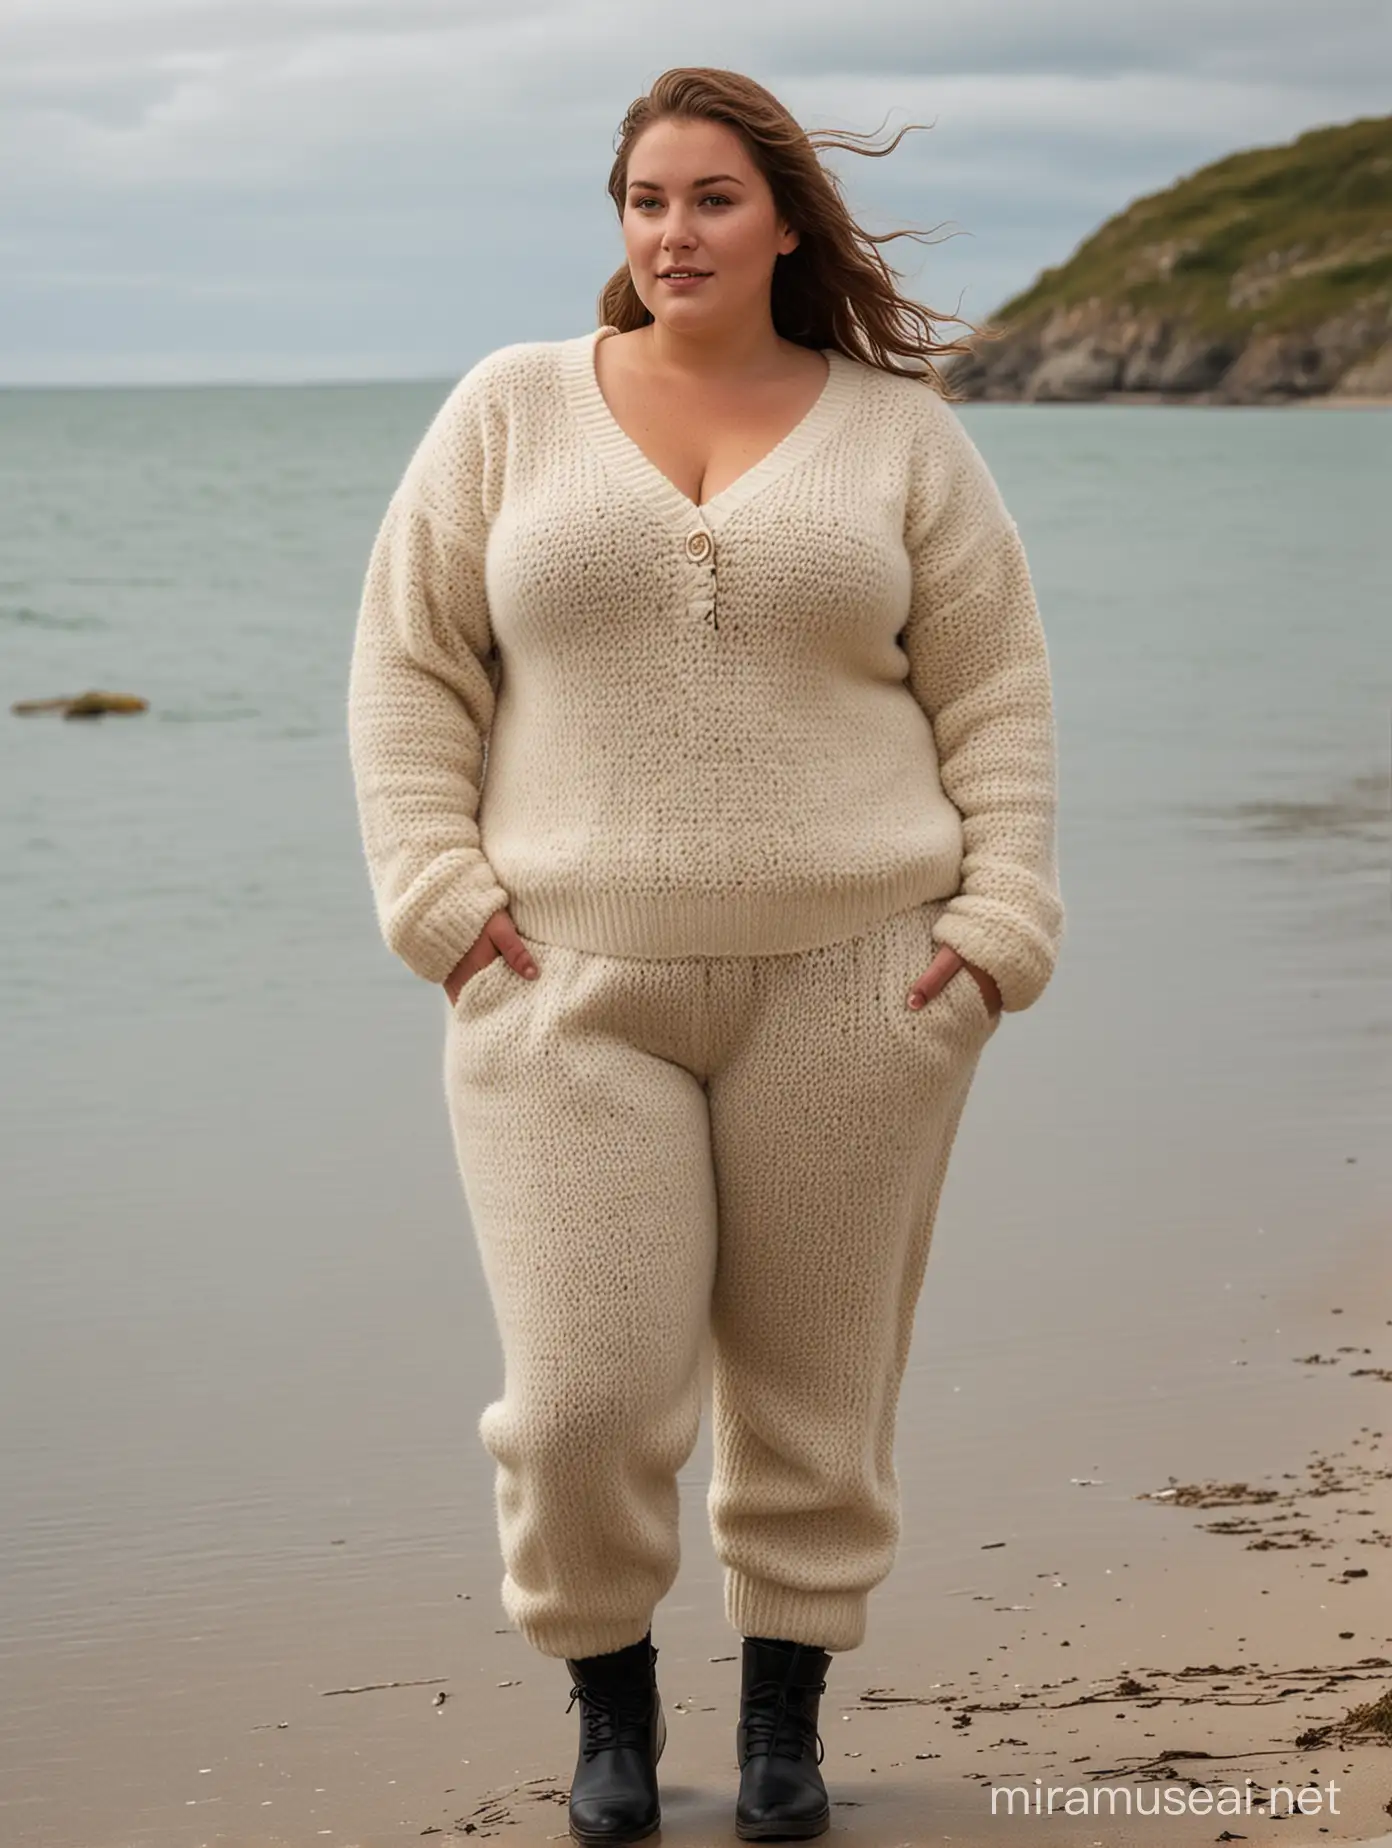 Curvy PlusSize Woman in Cozy Norwegian Sweater by the Summer Seashore